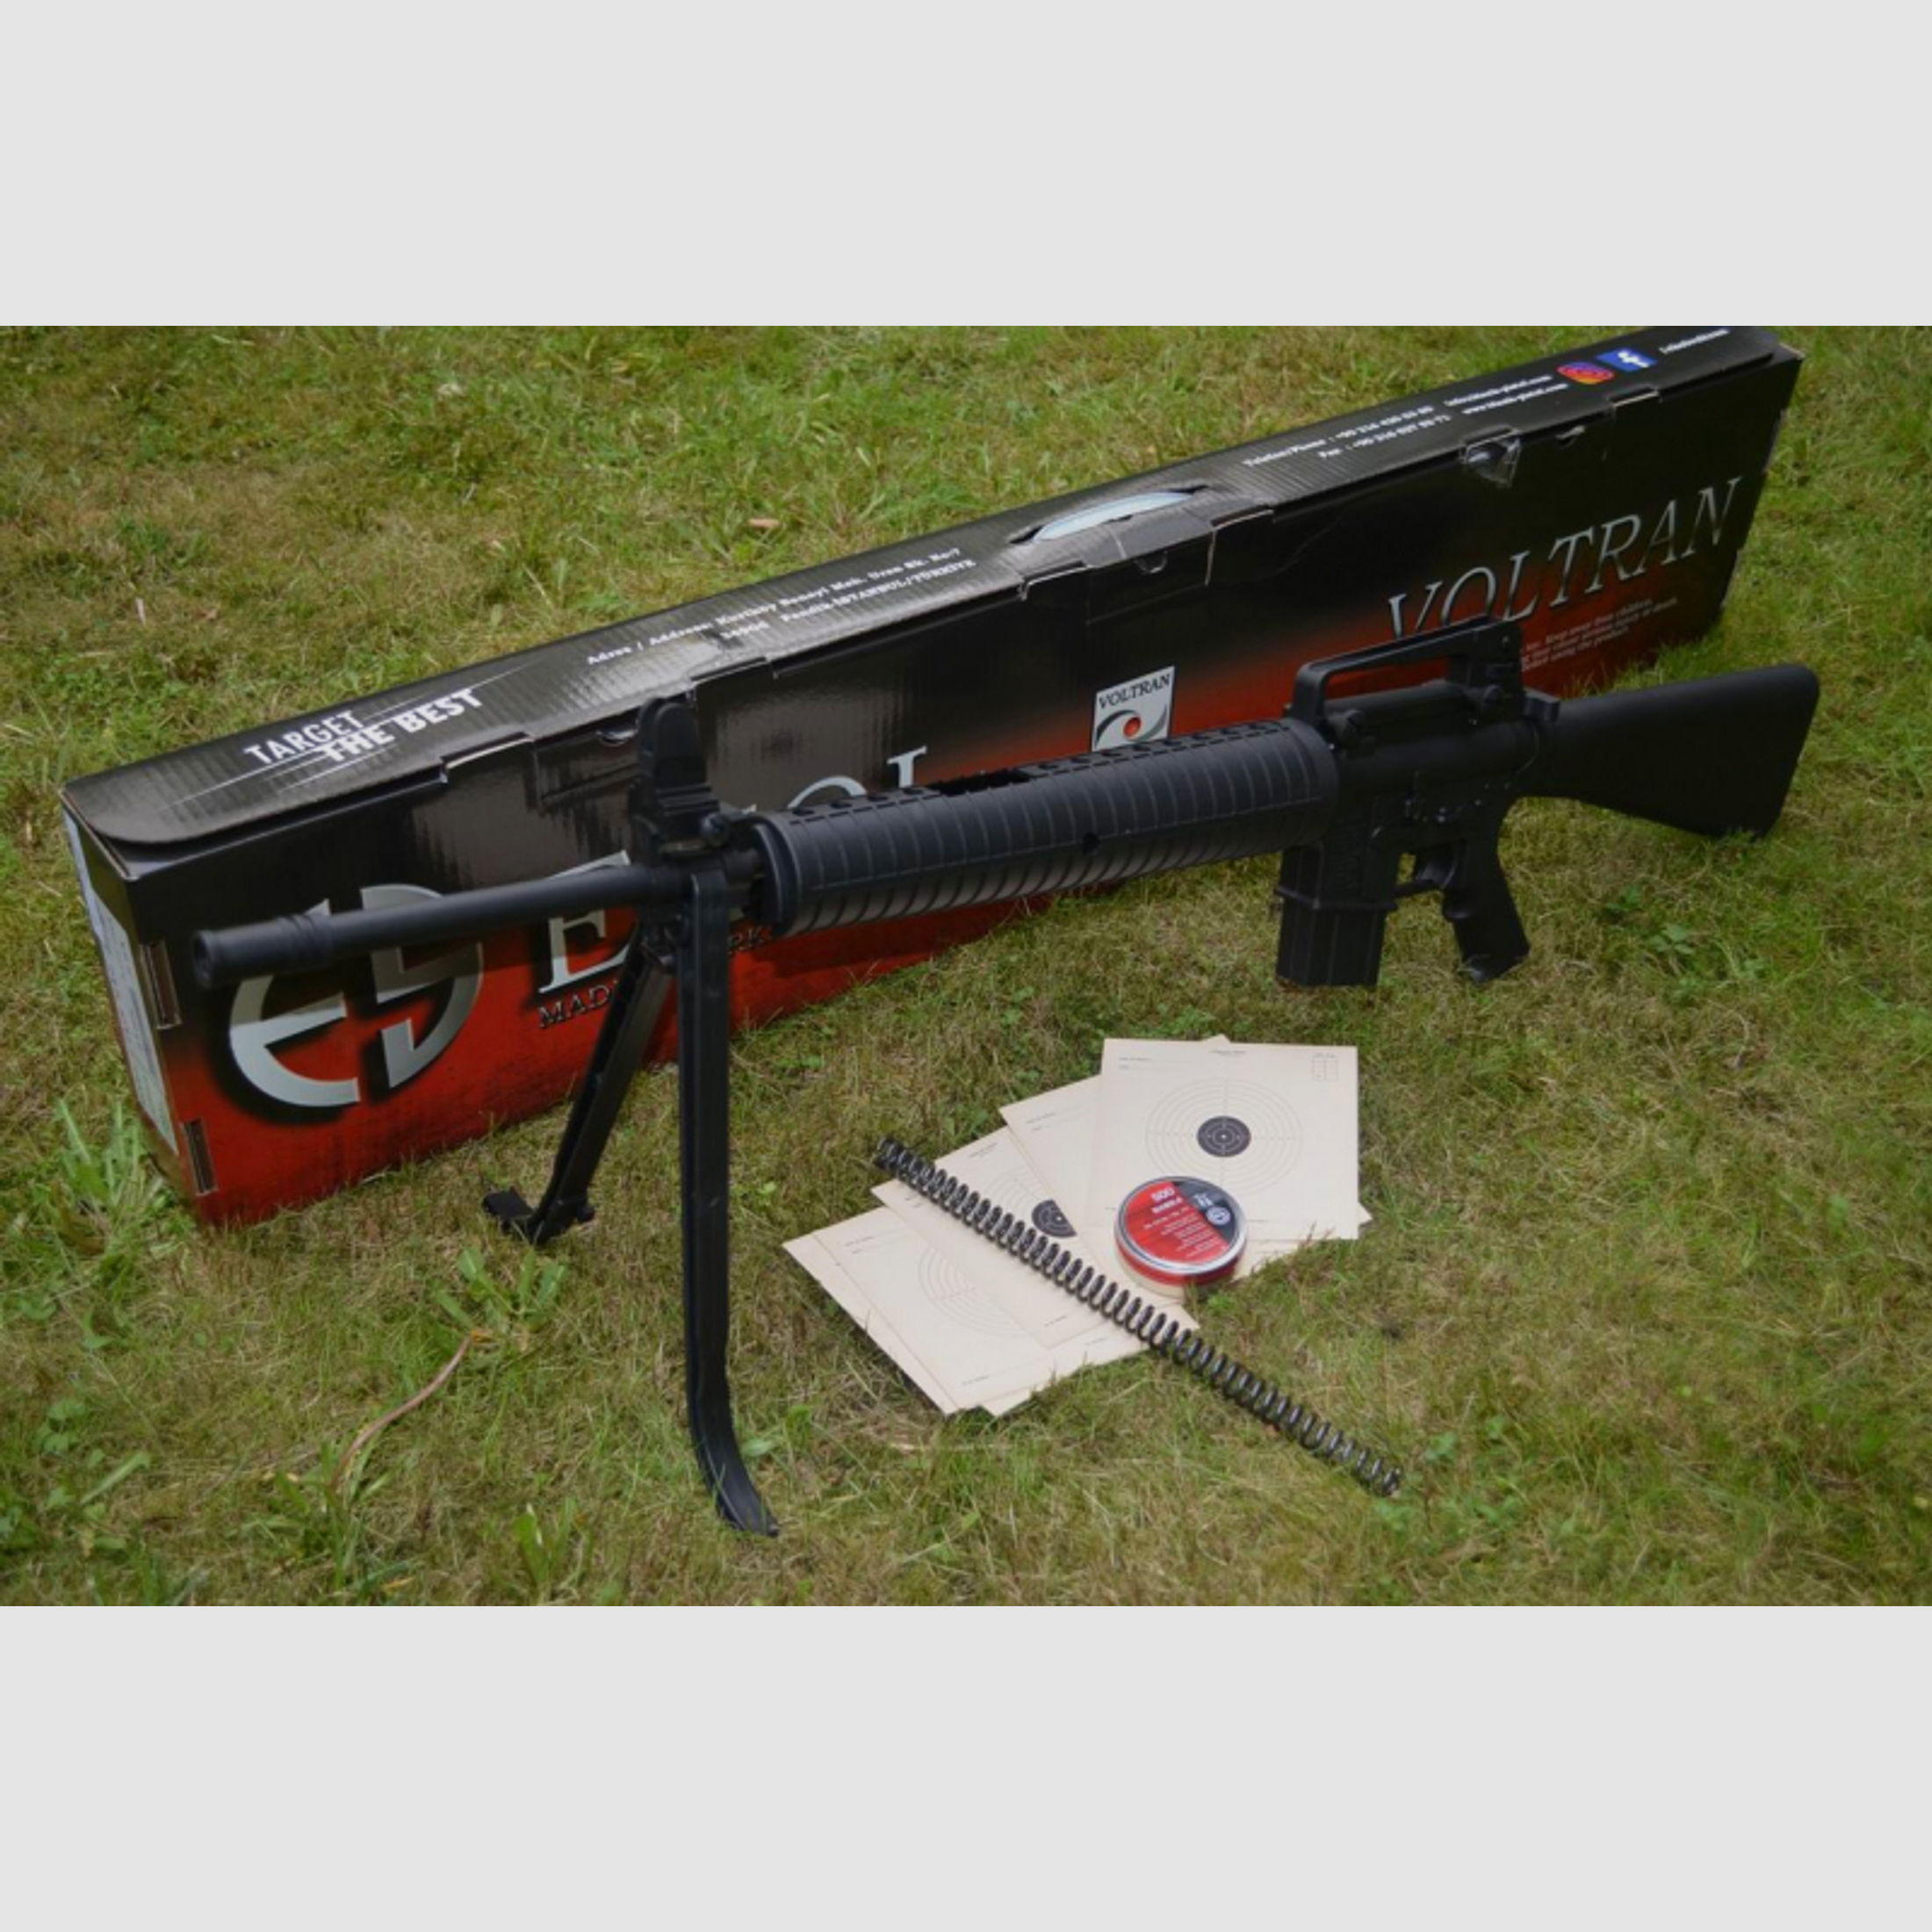 EKOL M450 * Colt M16 Nachbau * mit großem Starterpaket